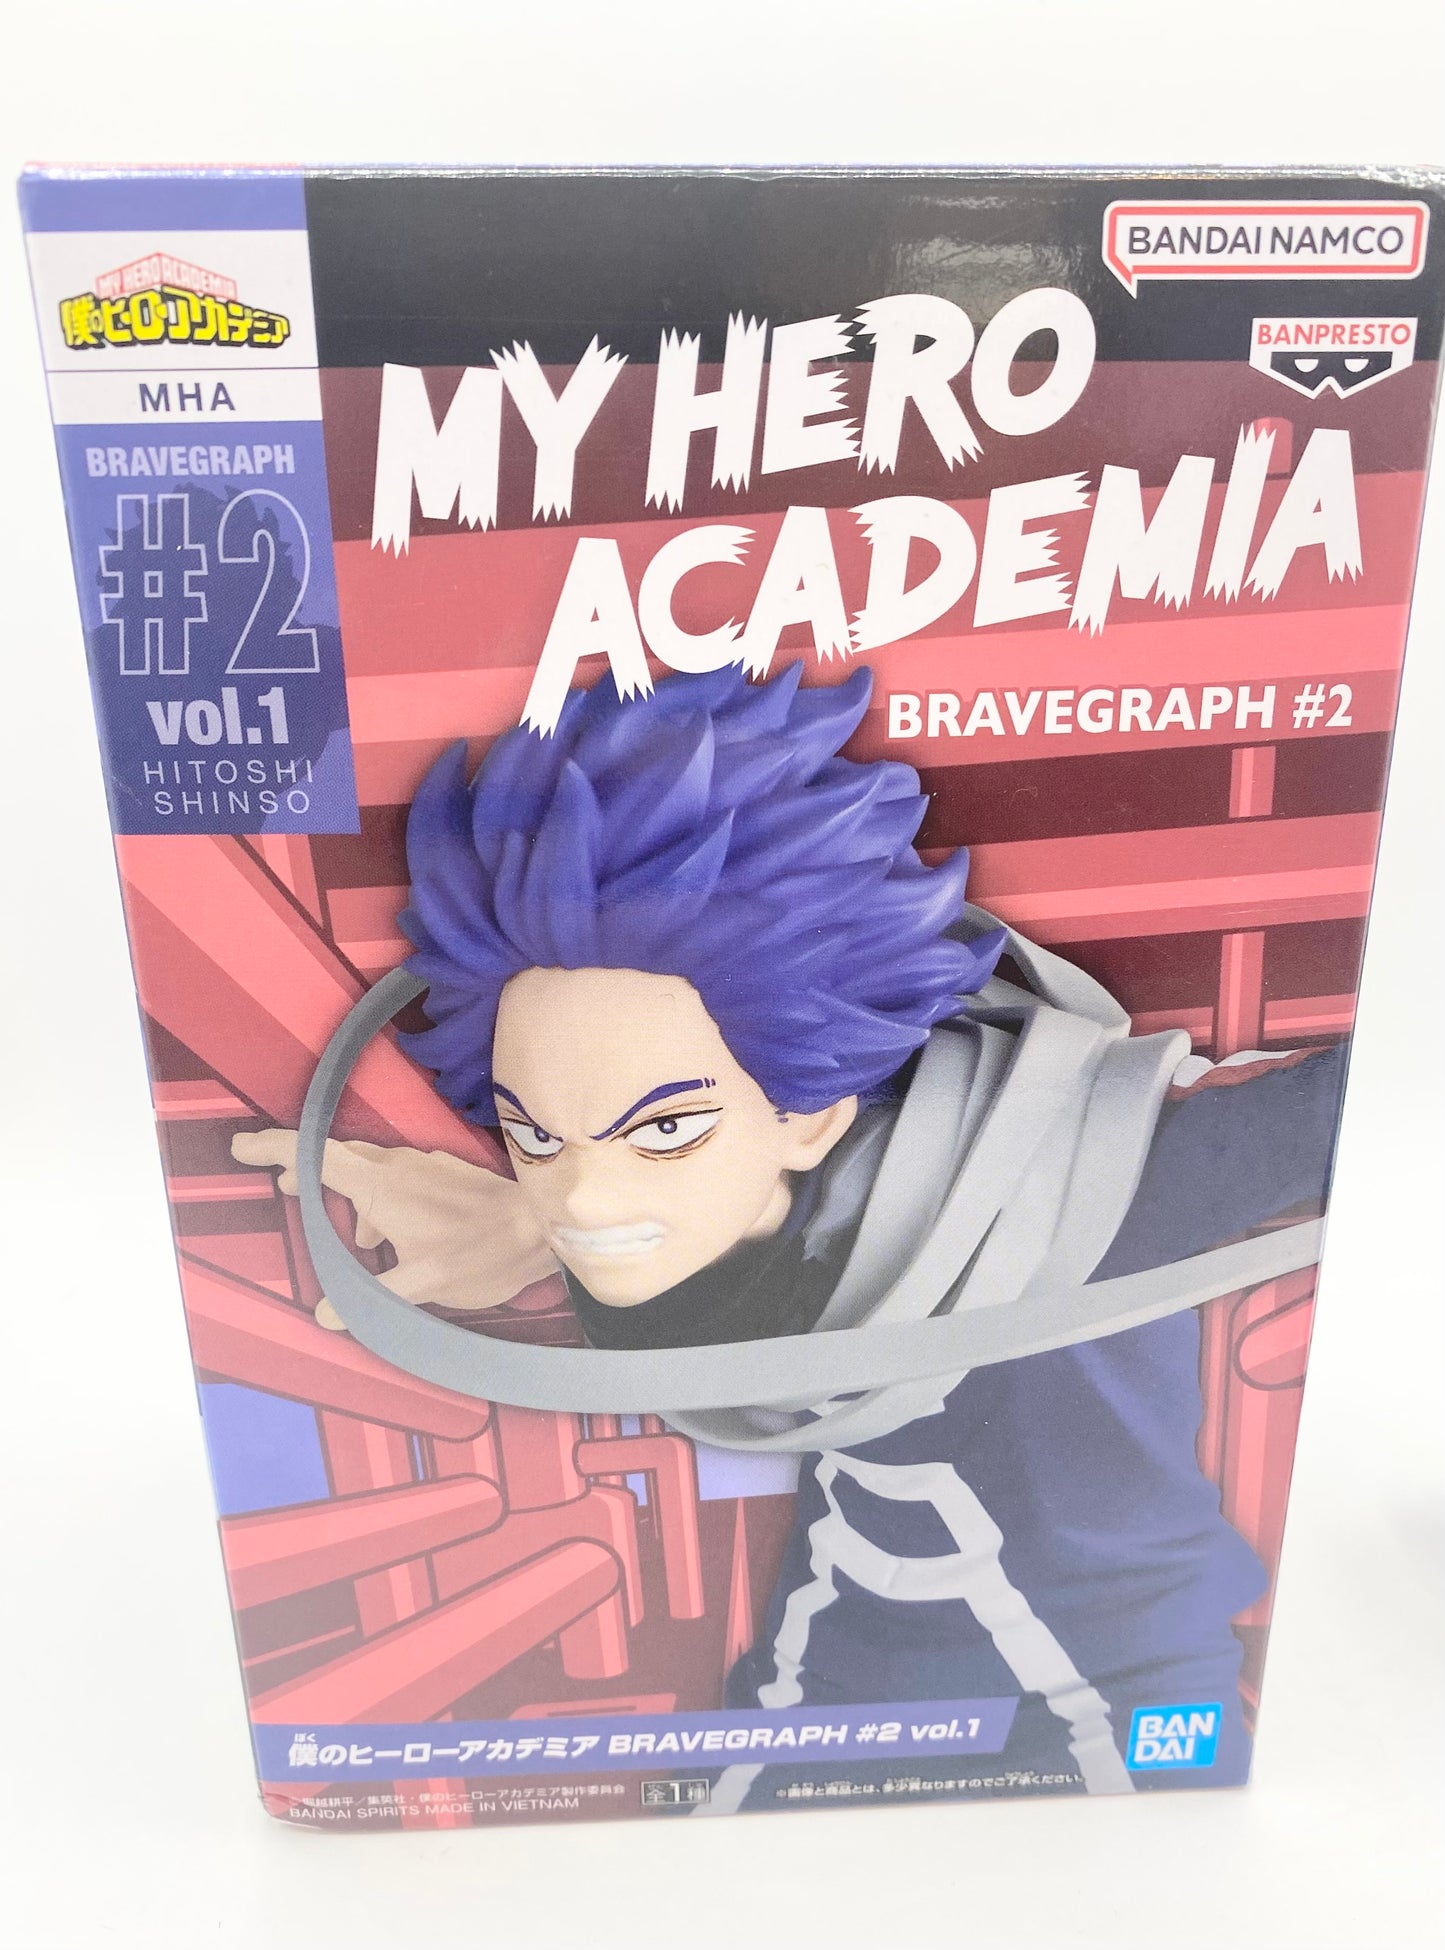 My Hero Academia Bravegraph #2 Vol.1 Bandai Banpresto Figurine